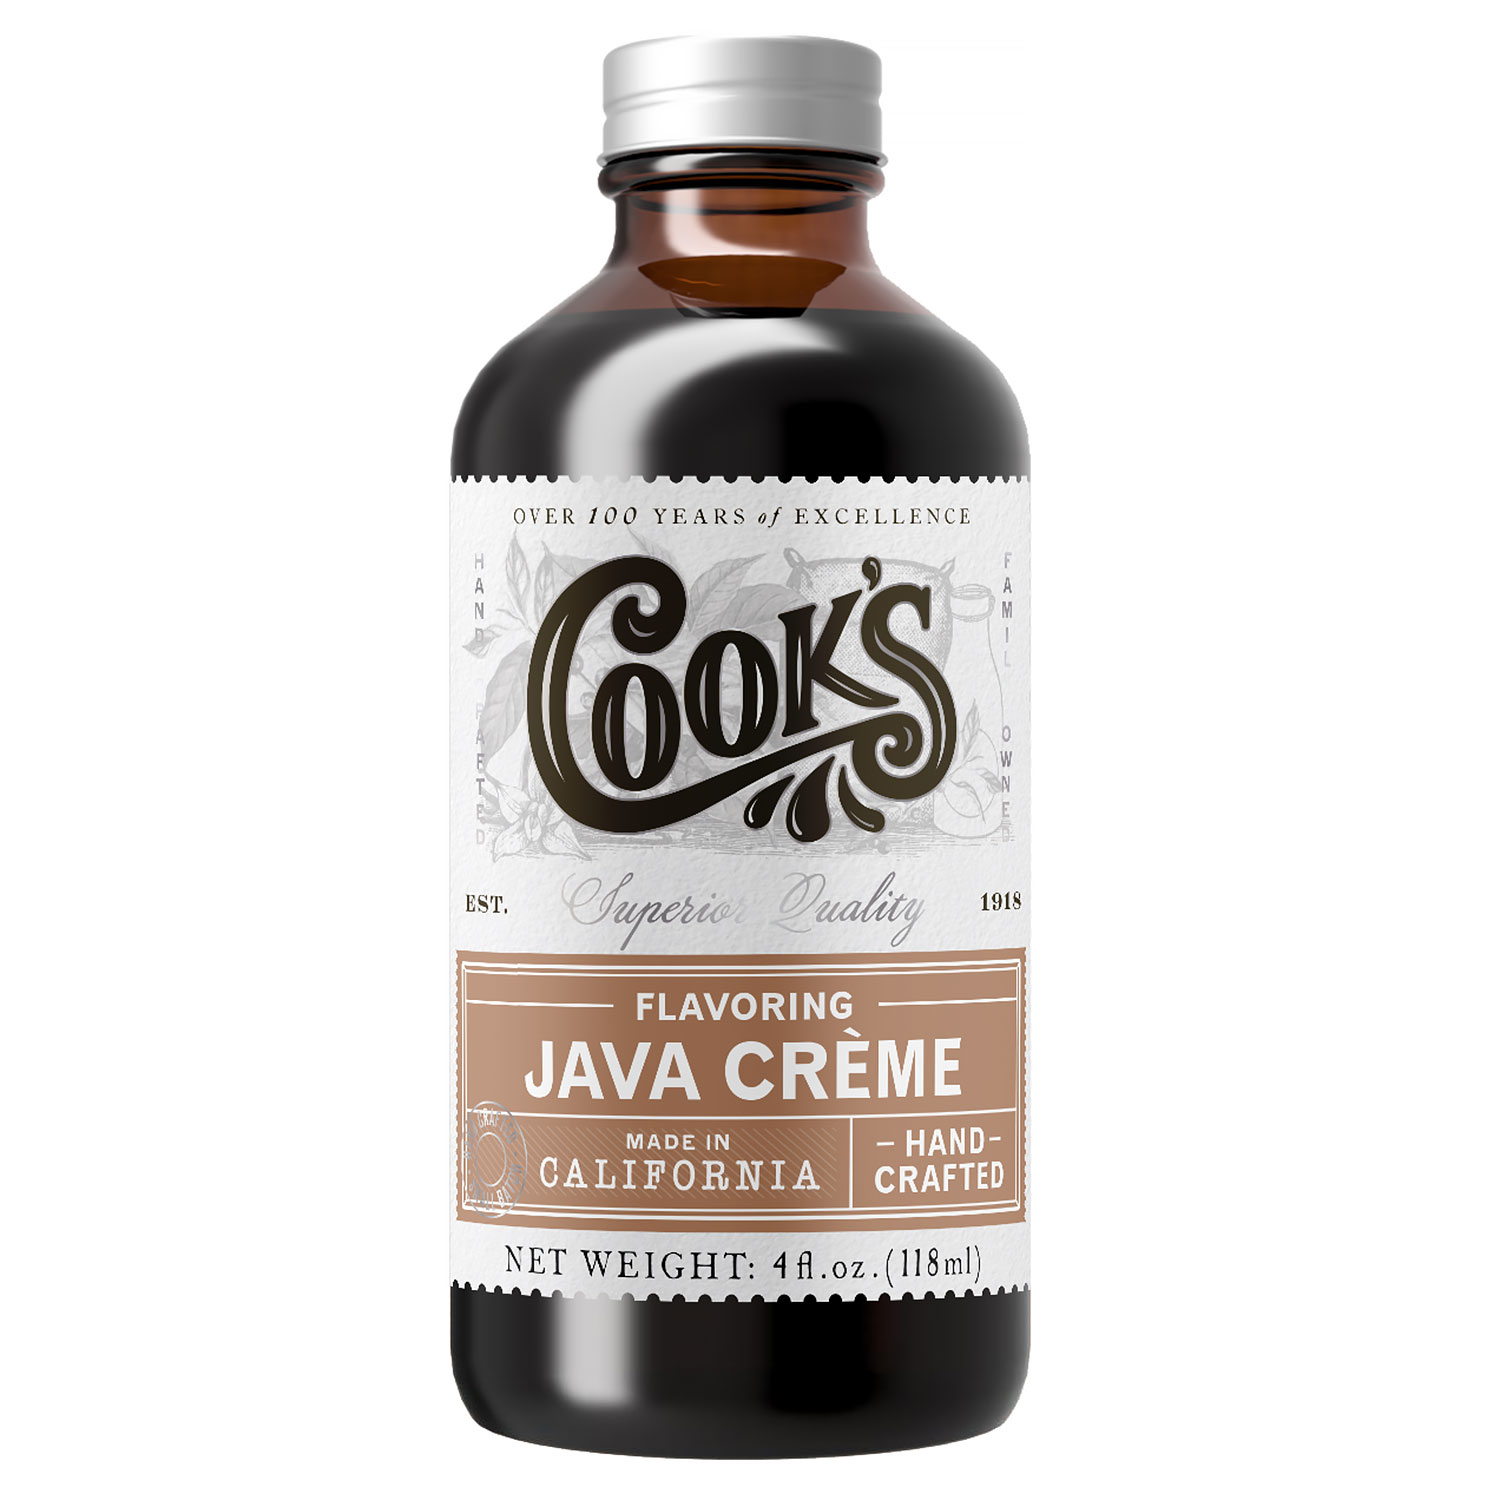 Cook's Pure Java Crème Flavoring